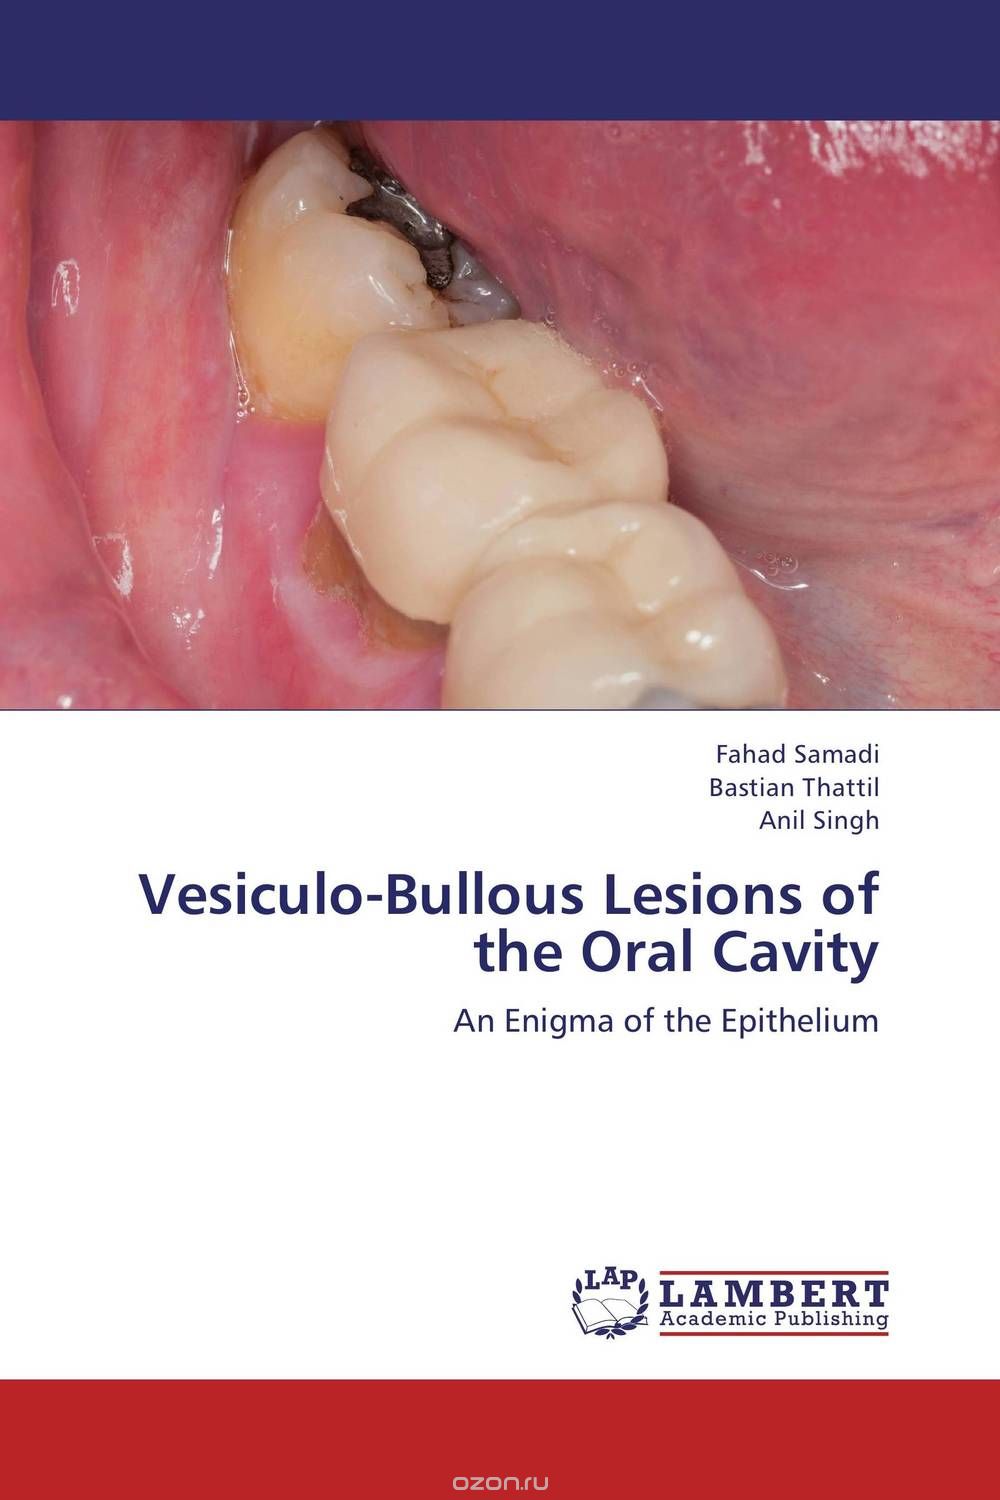 Скачать книгу "Vesiculo-Bullous Lesions of the Oral Cavity"